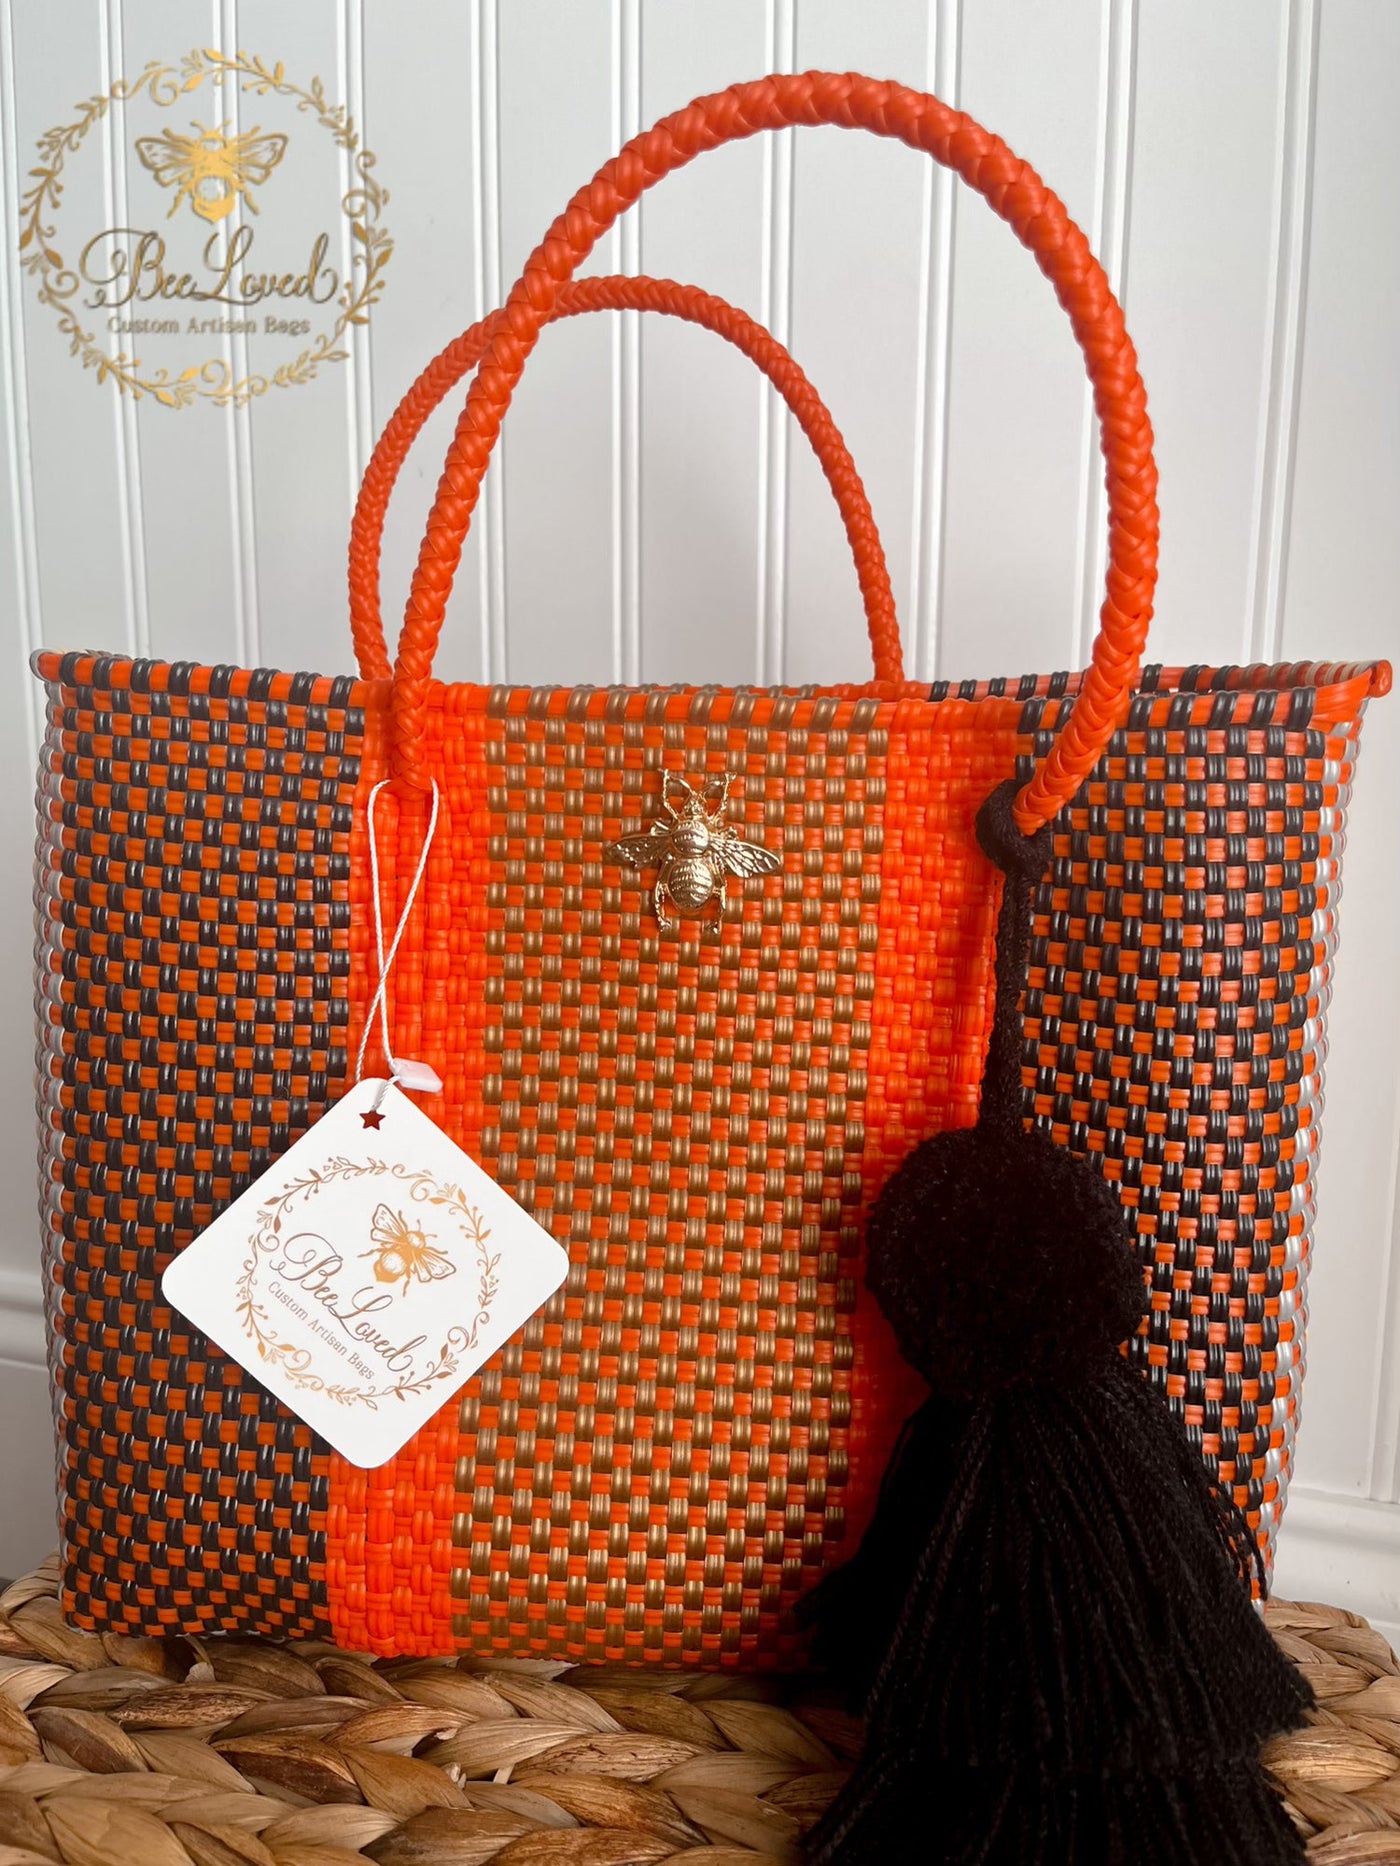 BeeLoved Custom Artisan Bags and Gifts Handbags Small Hallo Scream Beech Bag